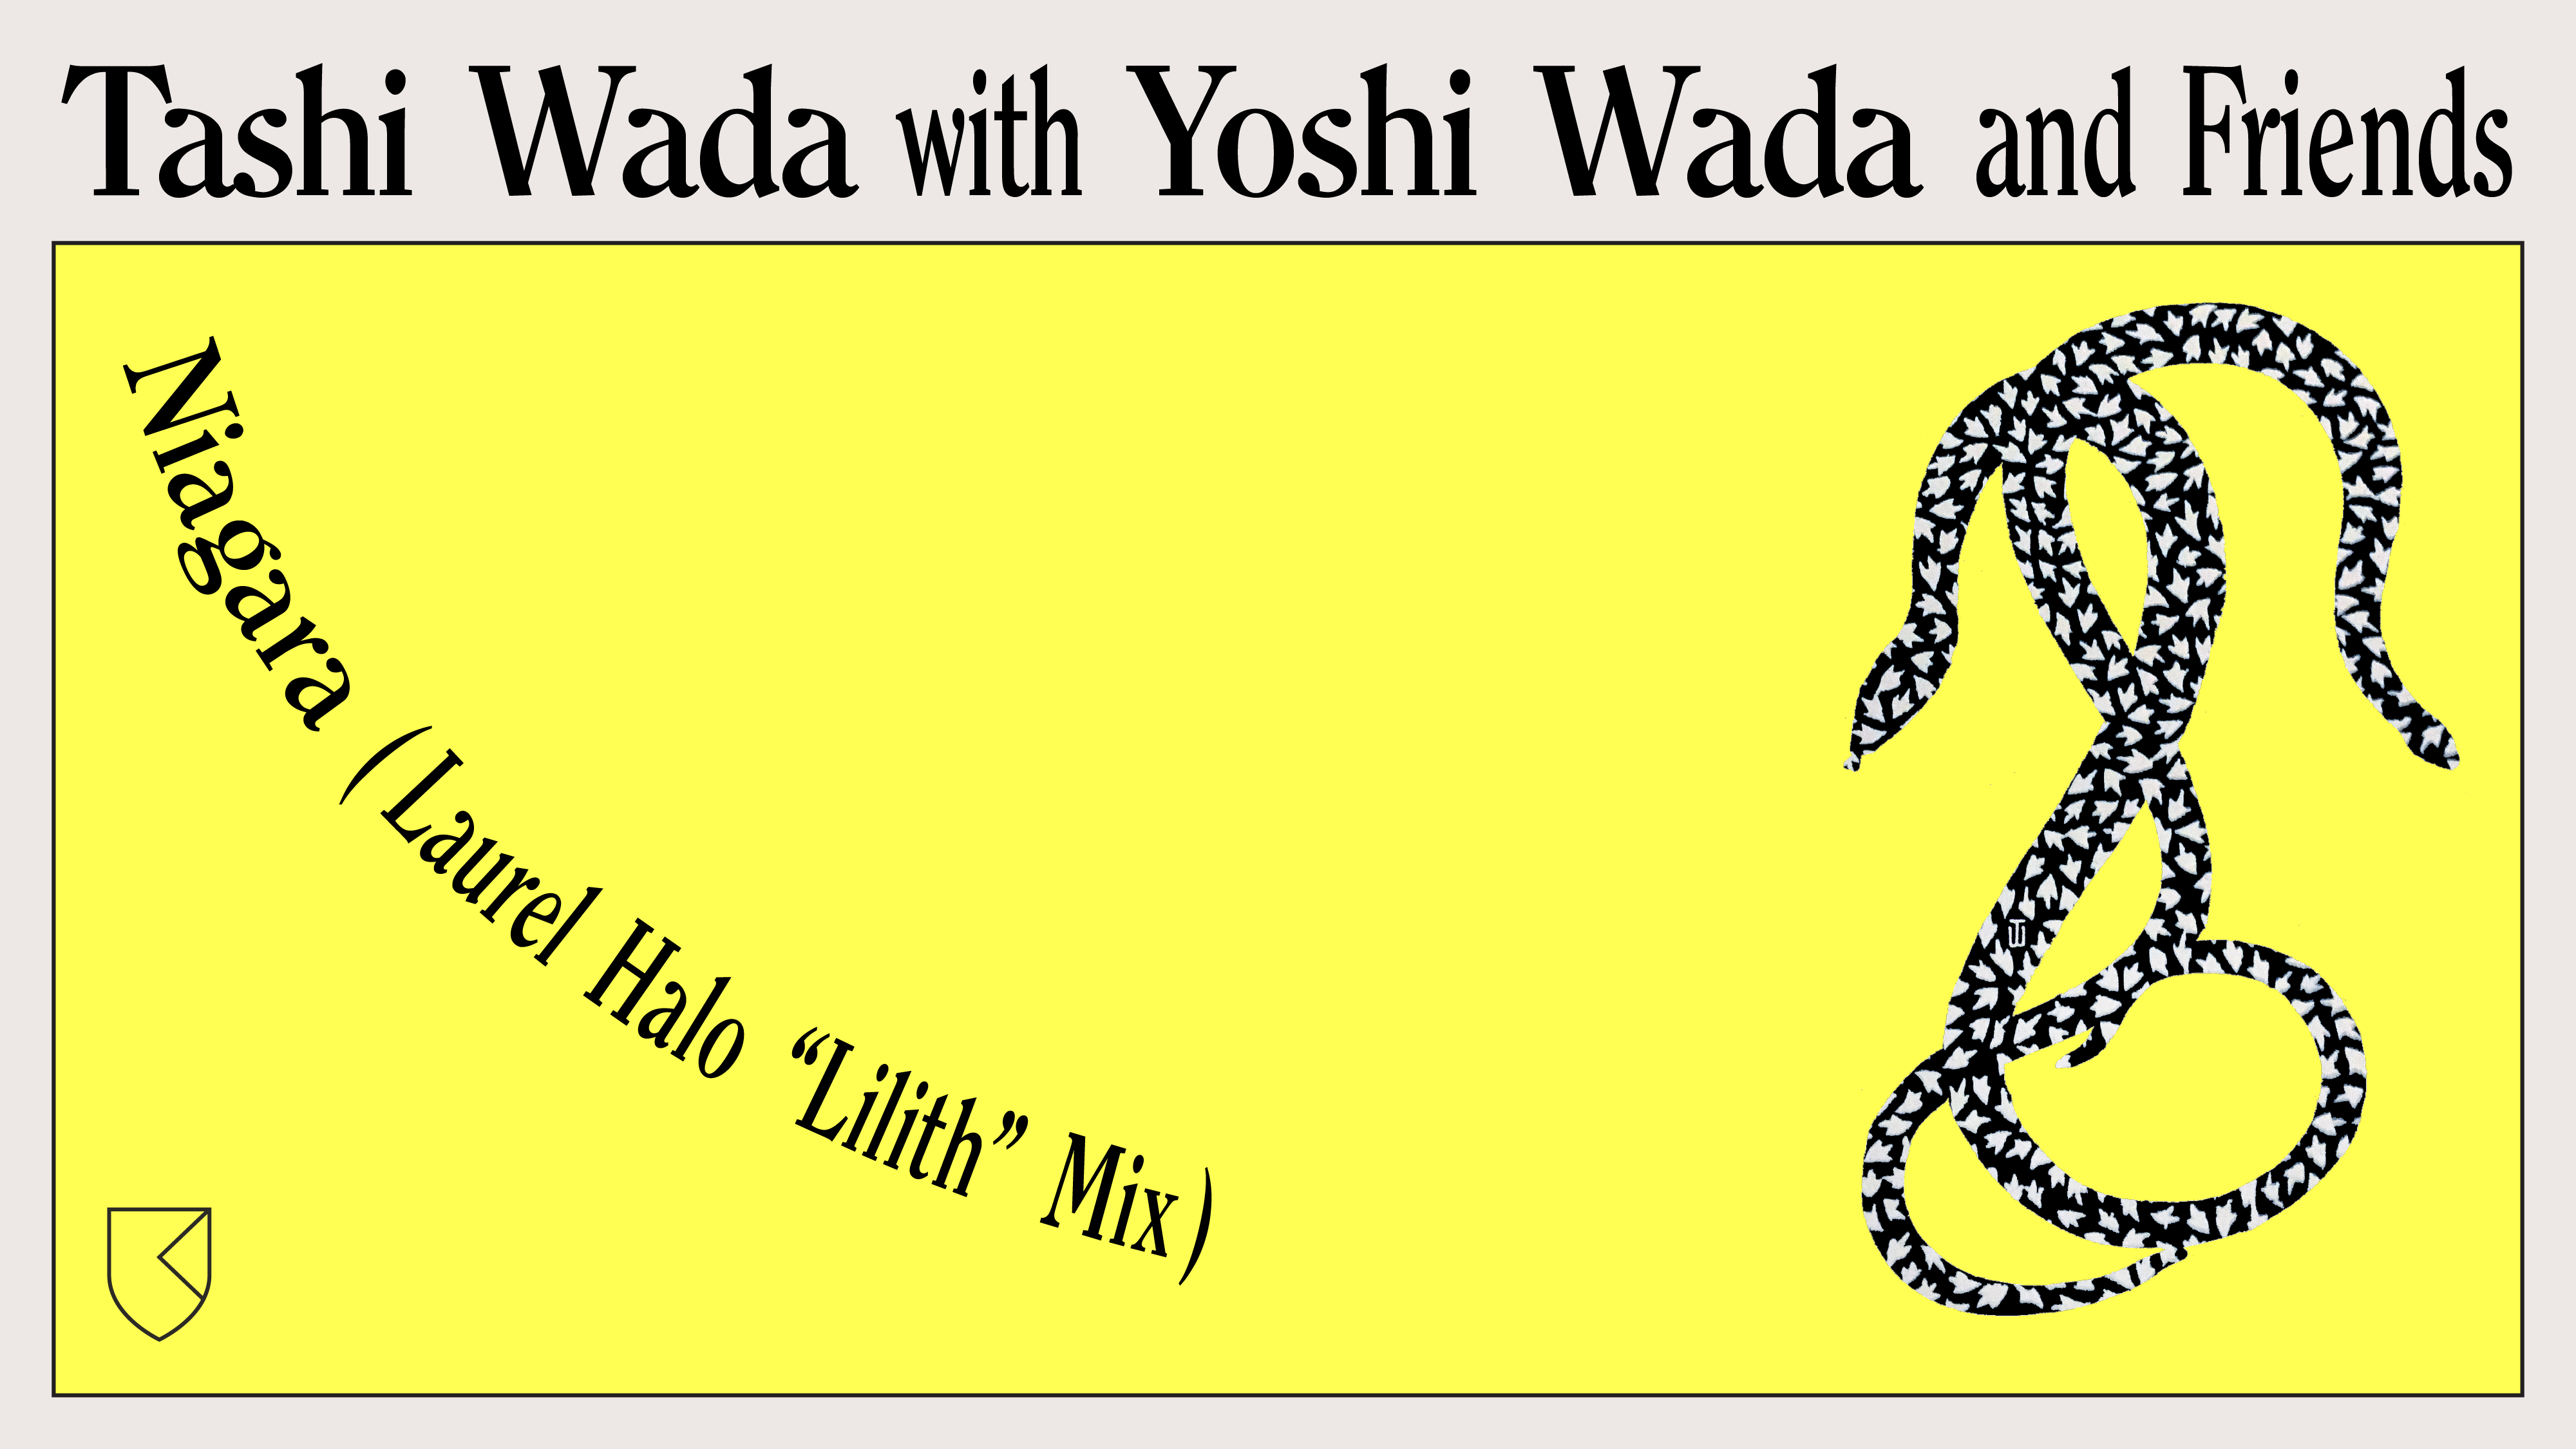 Link to Video for Tashi Wada with Yoshi Wada and Friends – Niagara (Laurel Halo “Lilith” Mix)